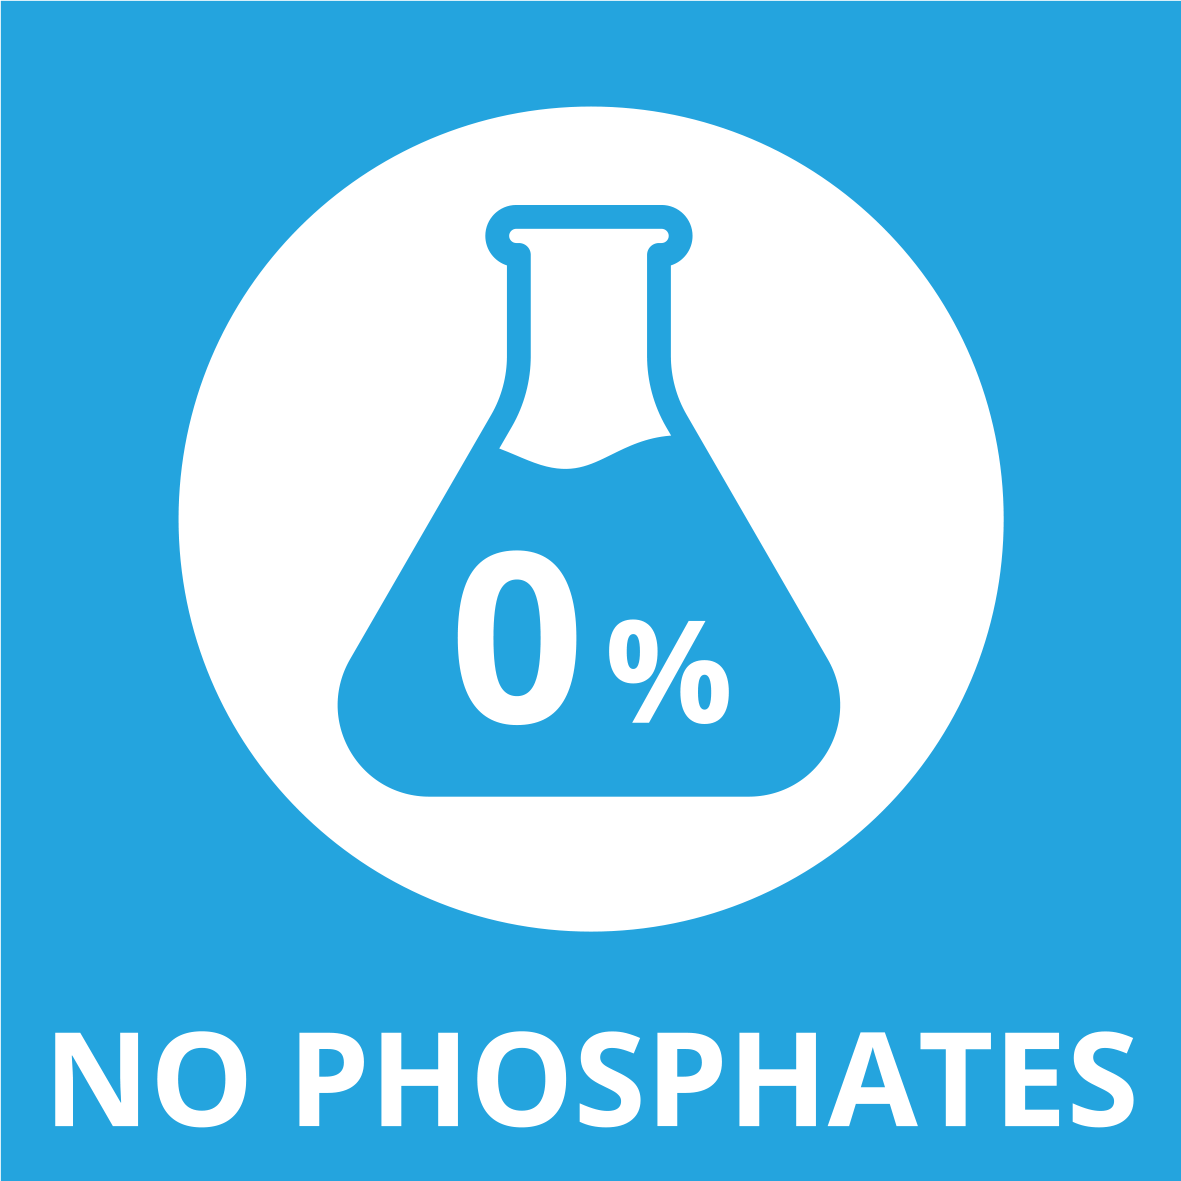 No phosphates